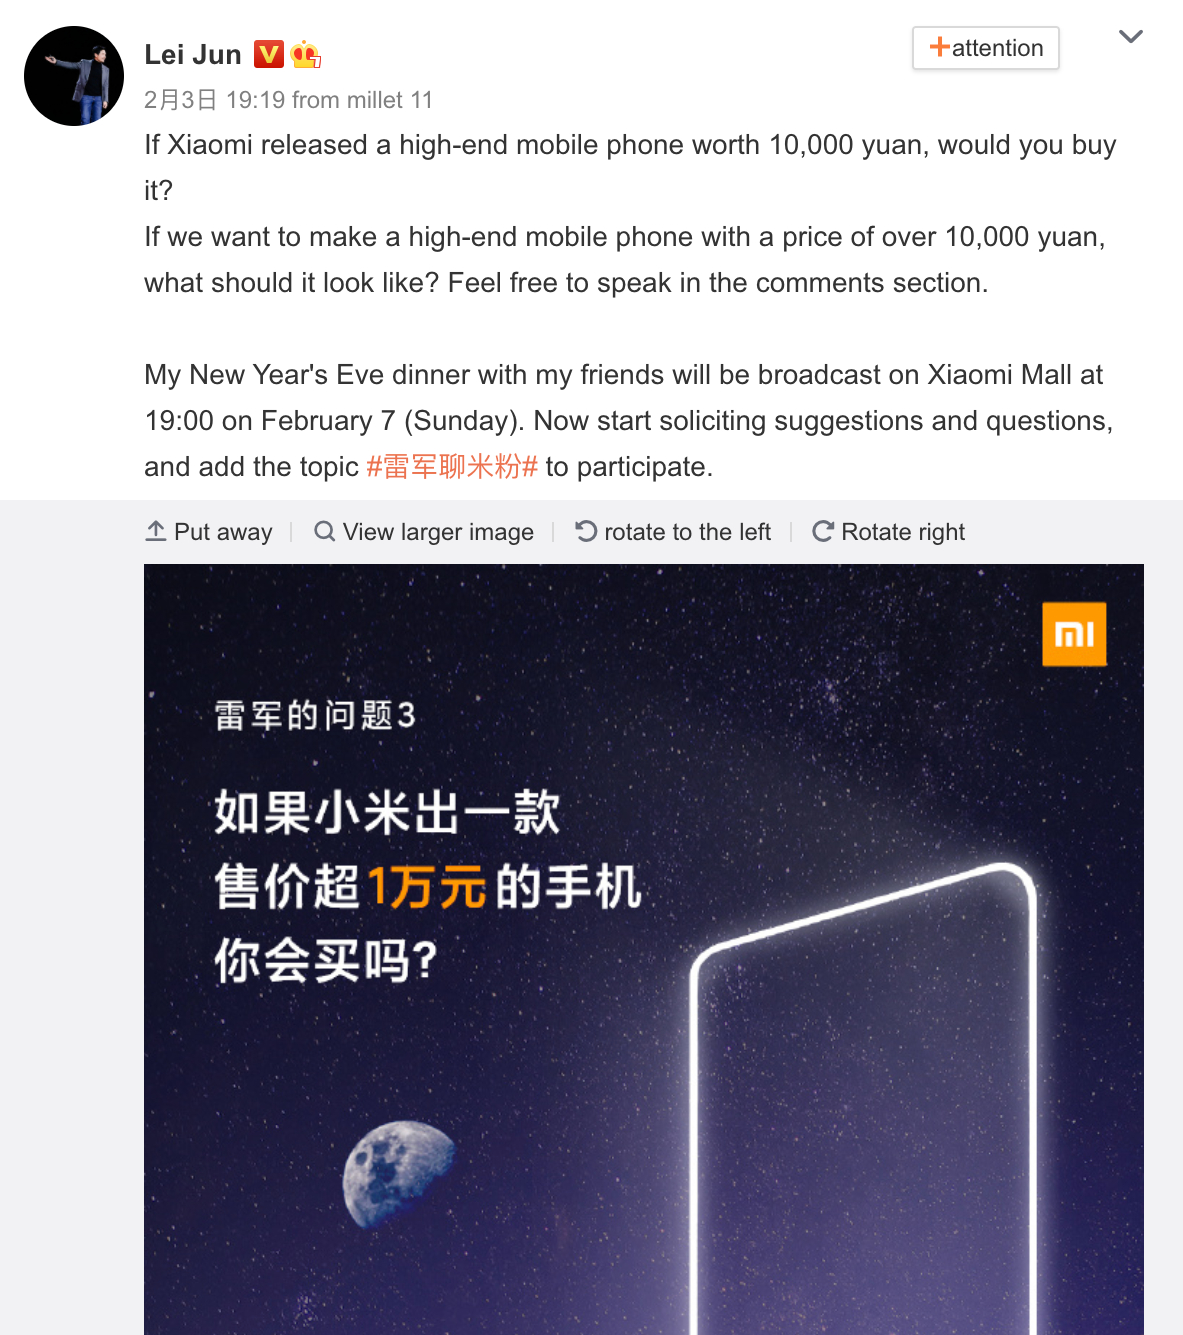 Xiaomi 1500 dollar phone weibo post